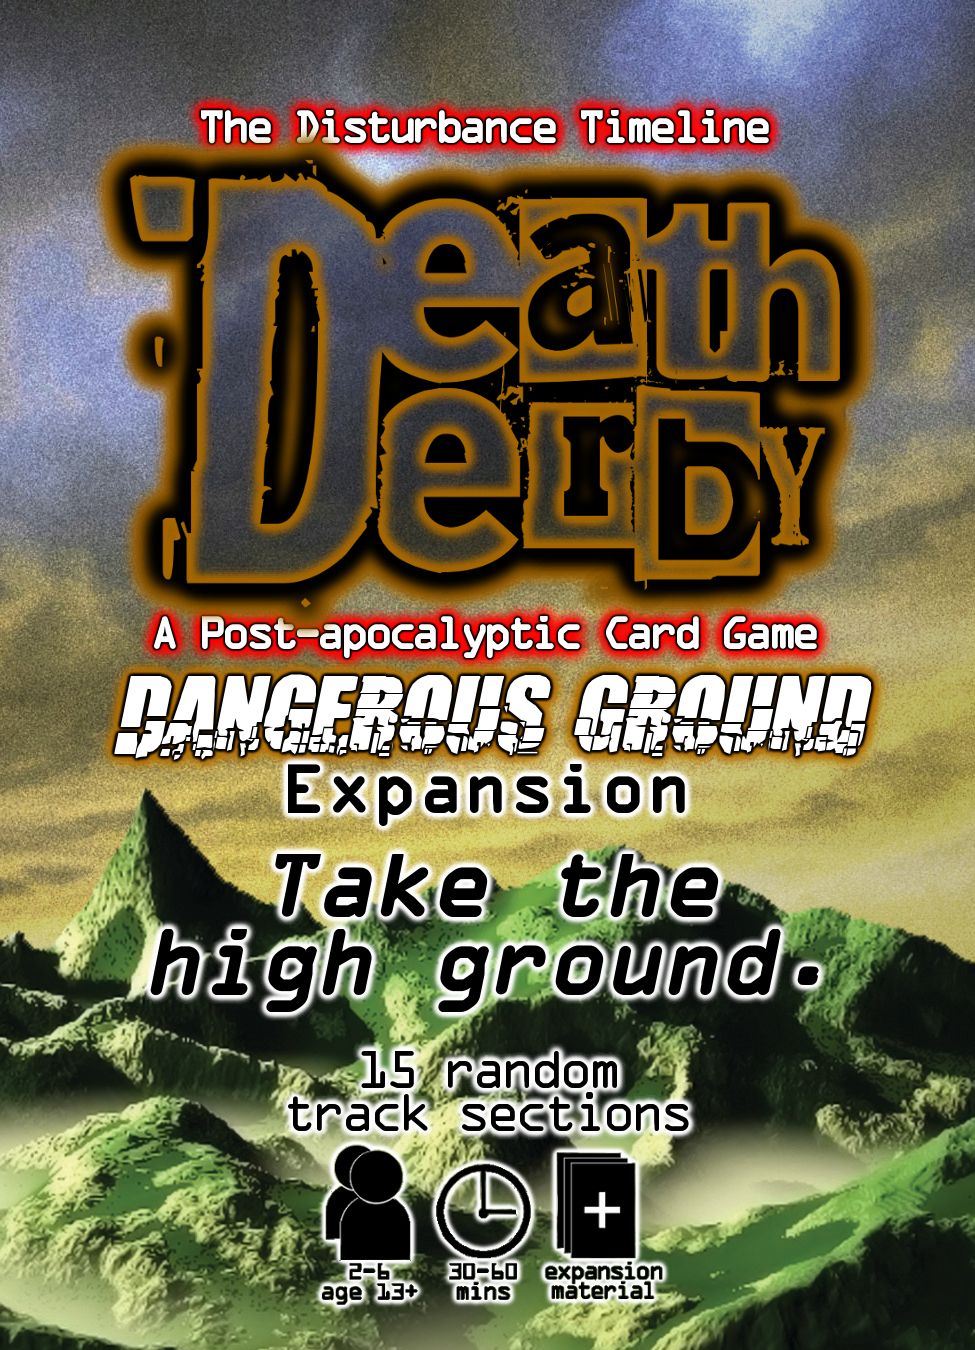 Death Derby: Dangerous Ground Expansion